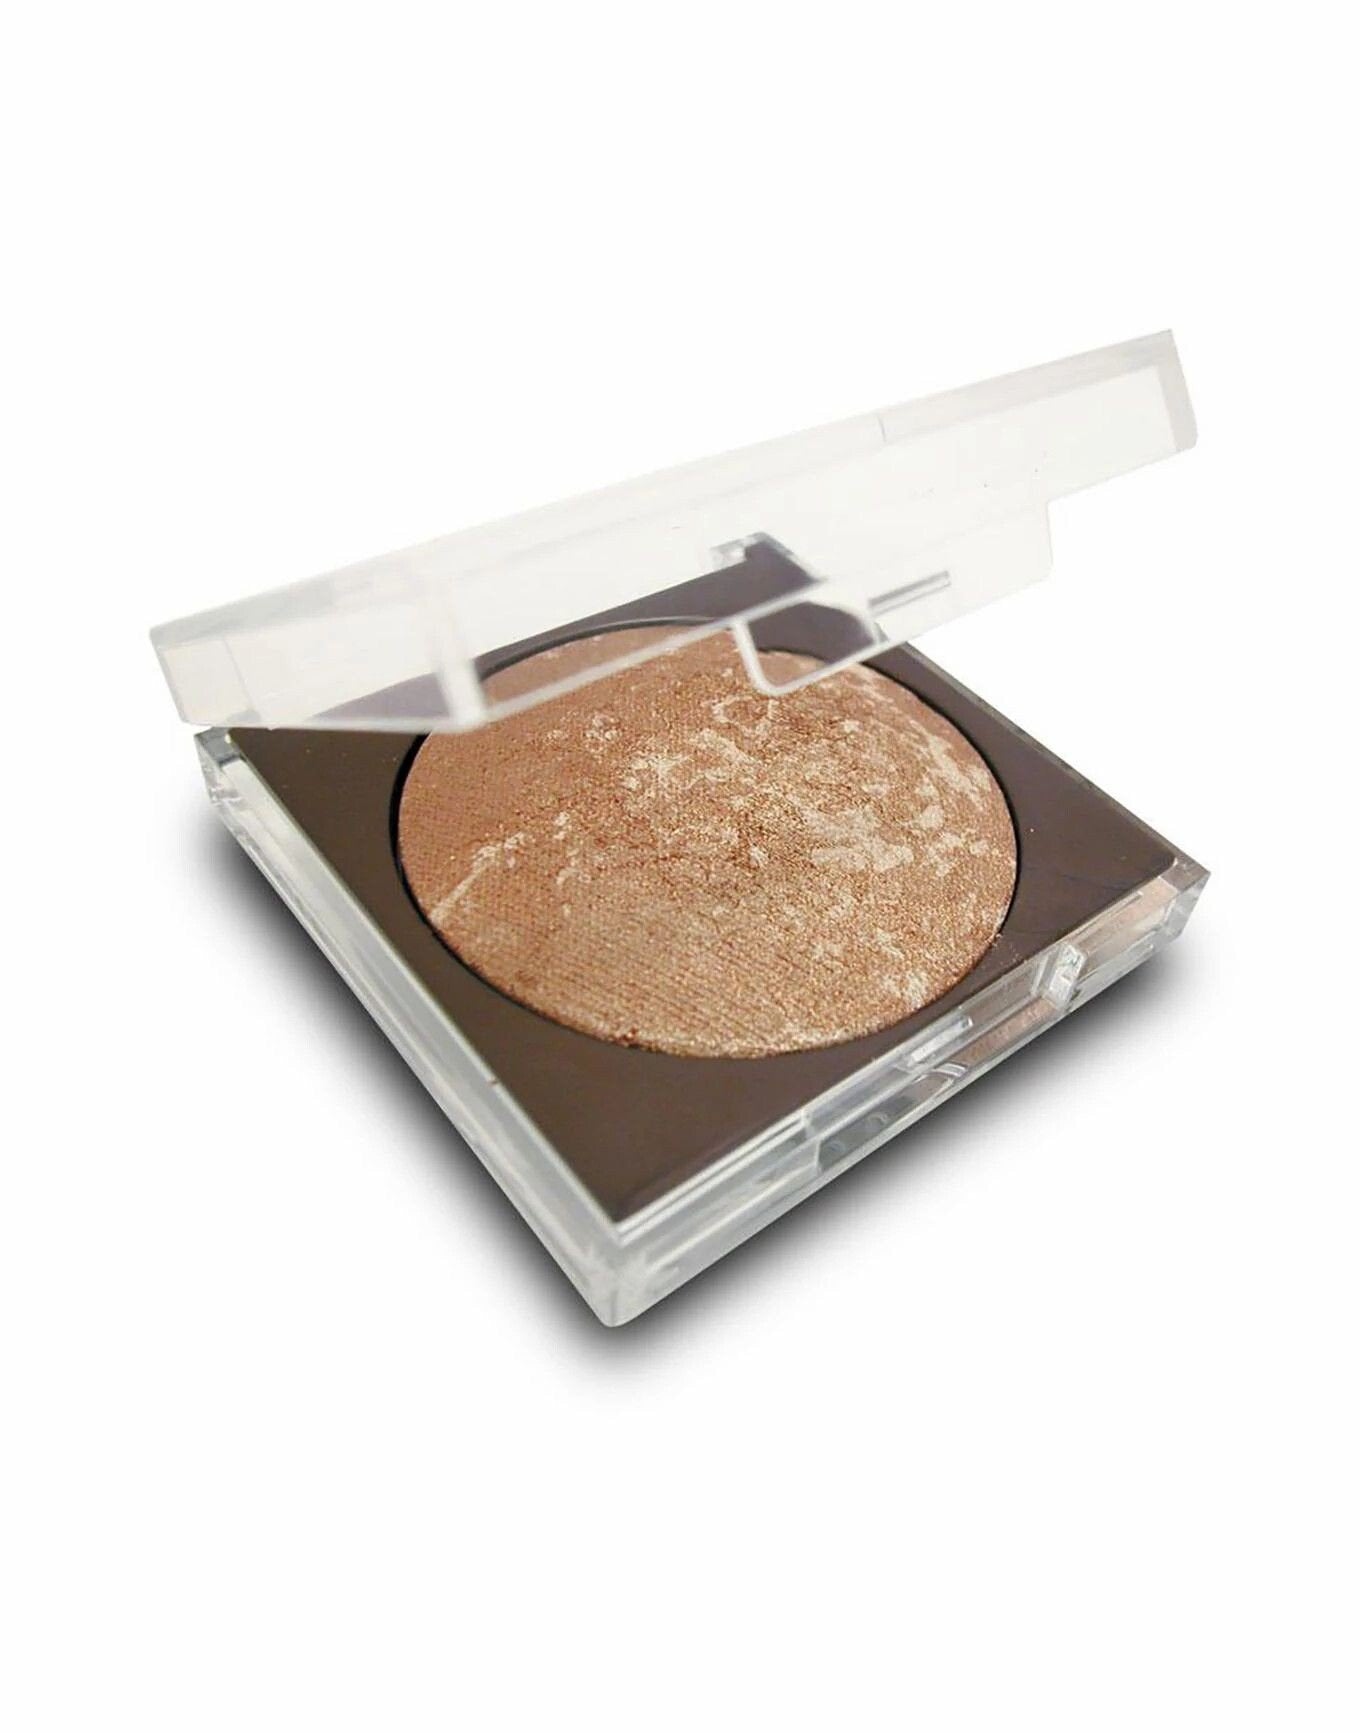 Baked Sun Powder - Terra abbronzante cotta ideale per contouring